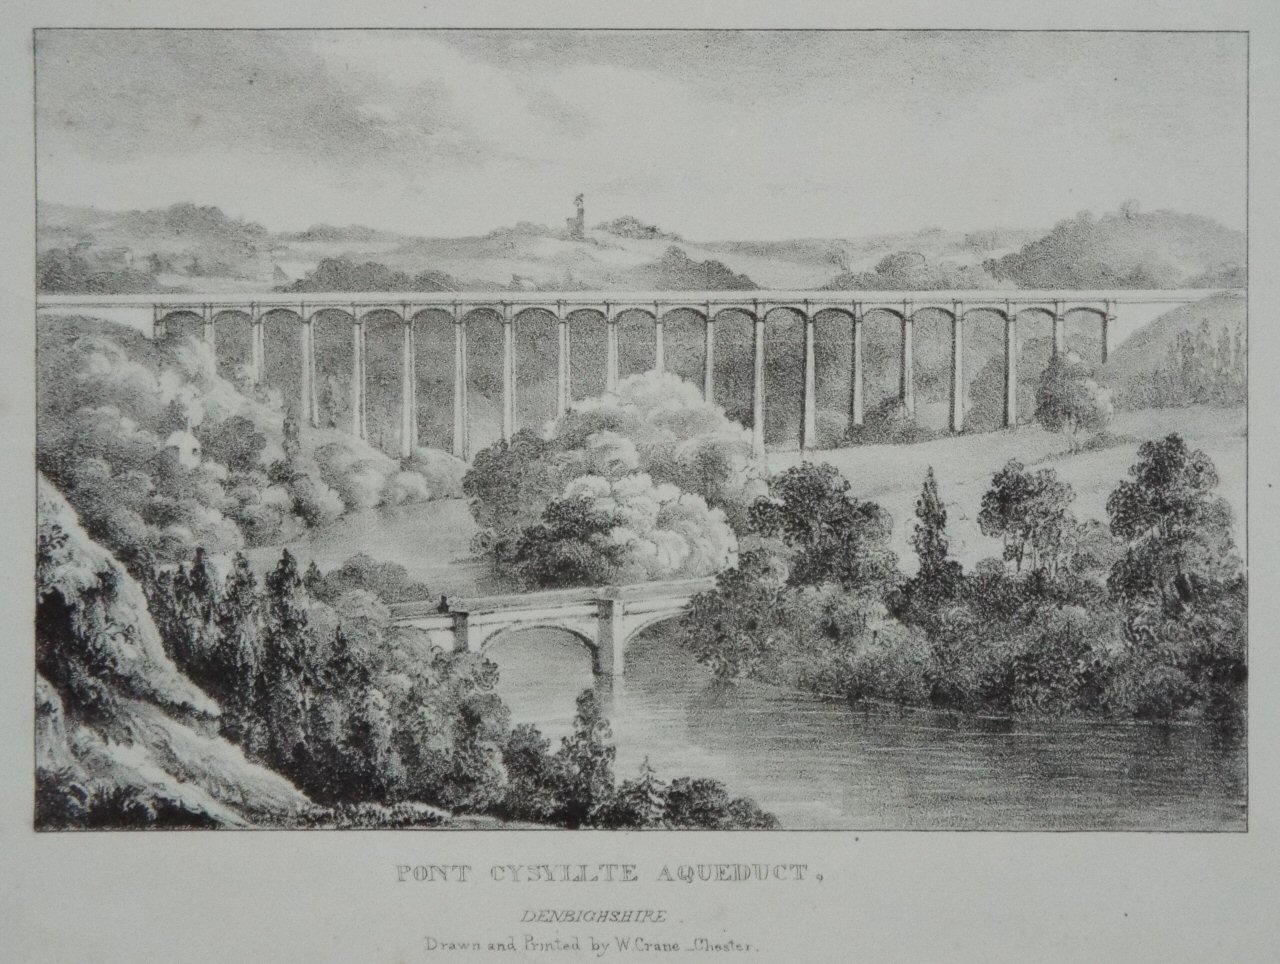 Lithograph - Pont Cysyllte Aqueduct, Denbighshire. - Crane